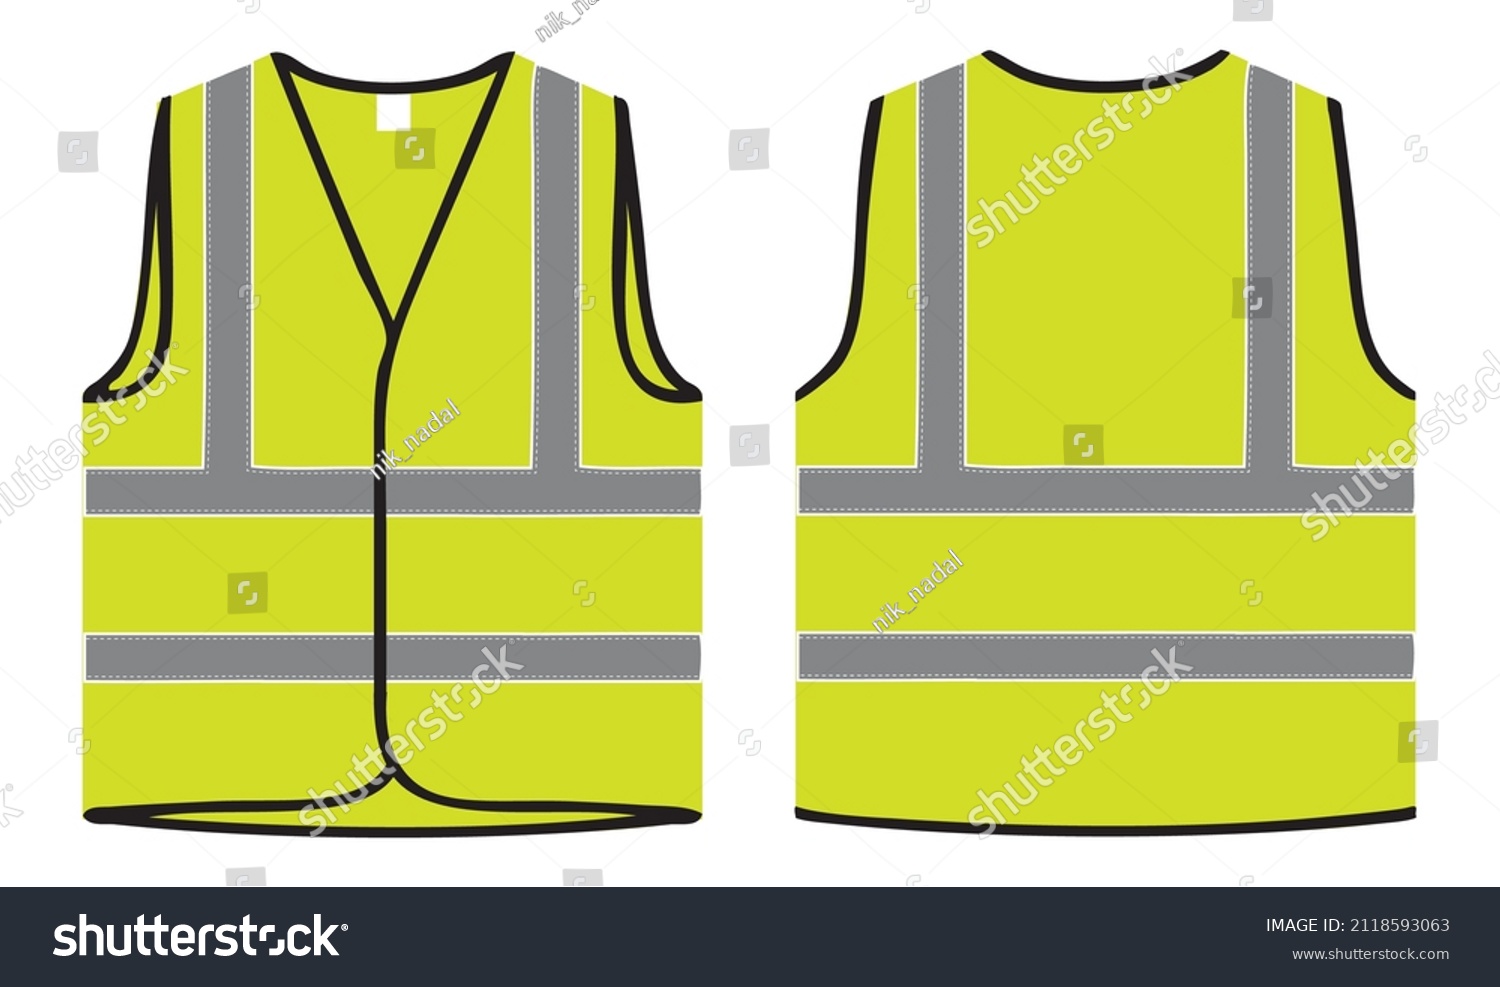 SVG of Safety Jacket or safety vest vector illustration, yellow safety jacket front and back realistic view, reflected yellow jacket front and back view for mockup design svg